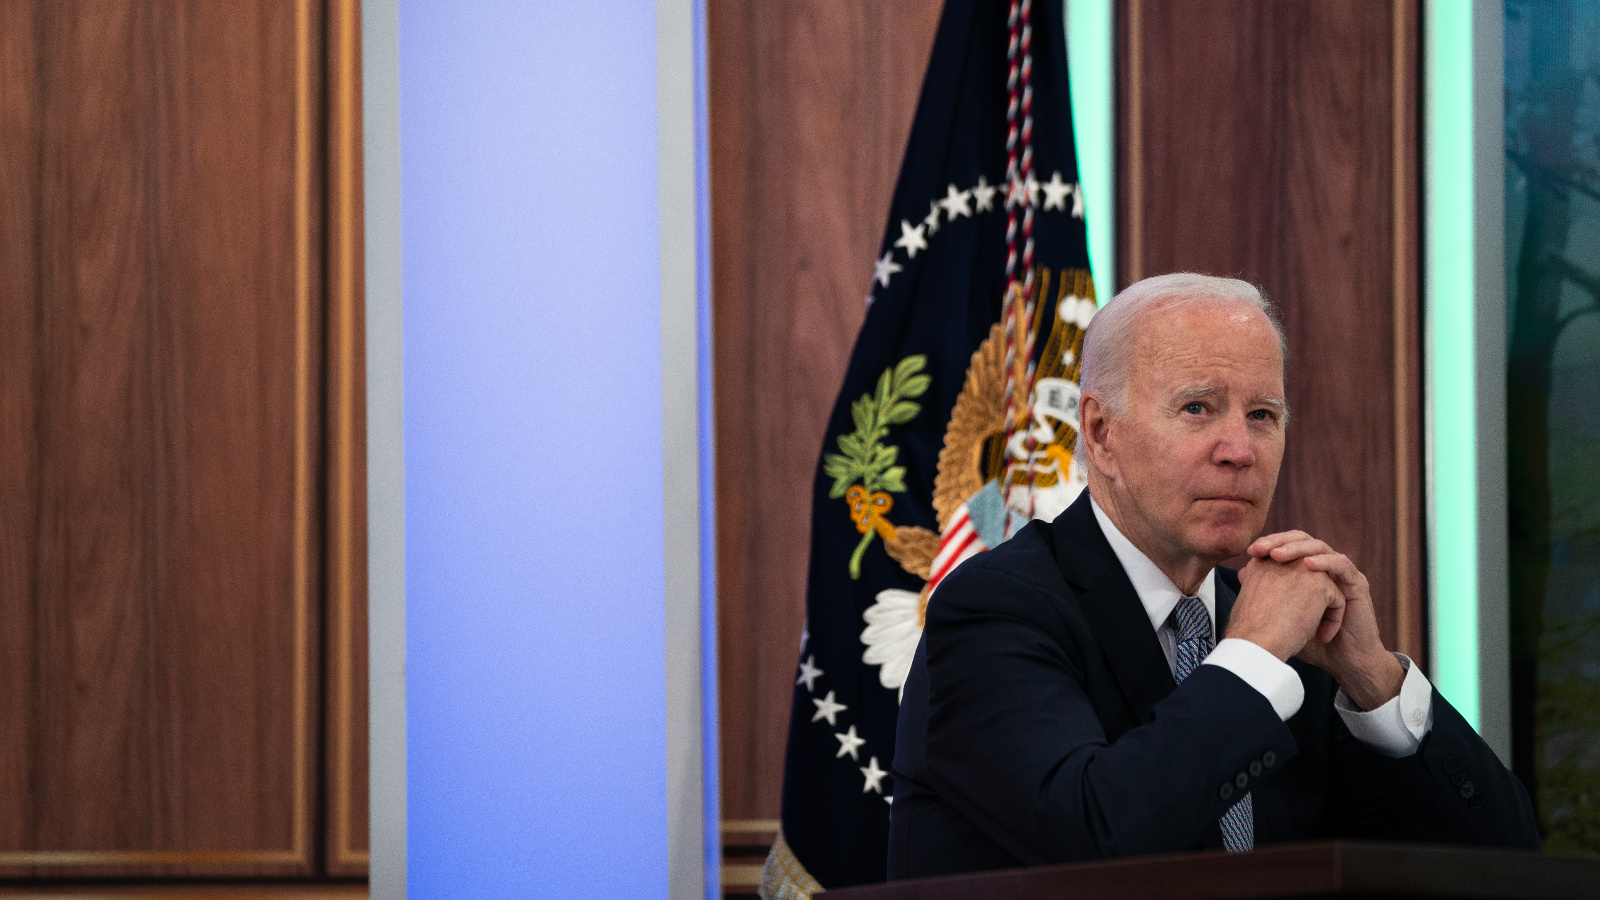 Photo of President Biden sitting at a podium